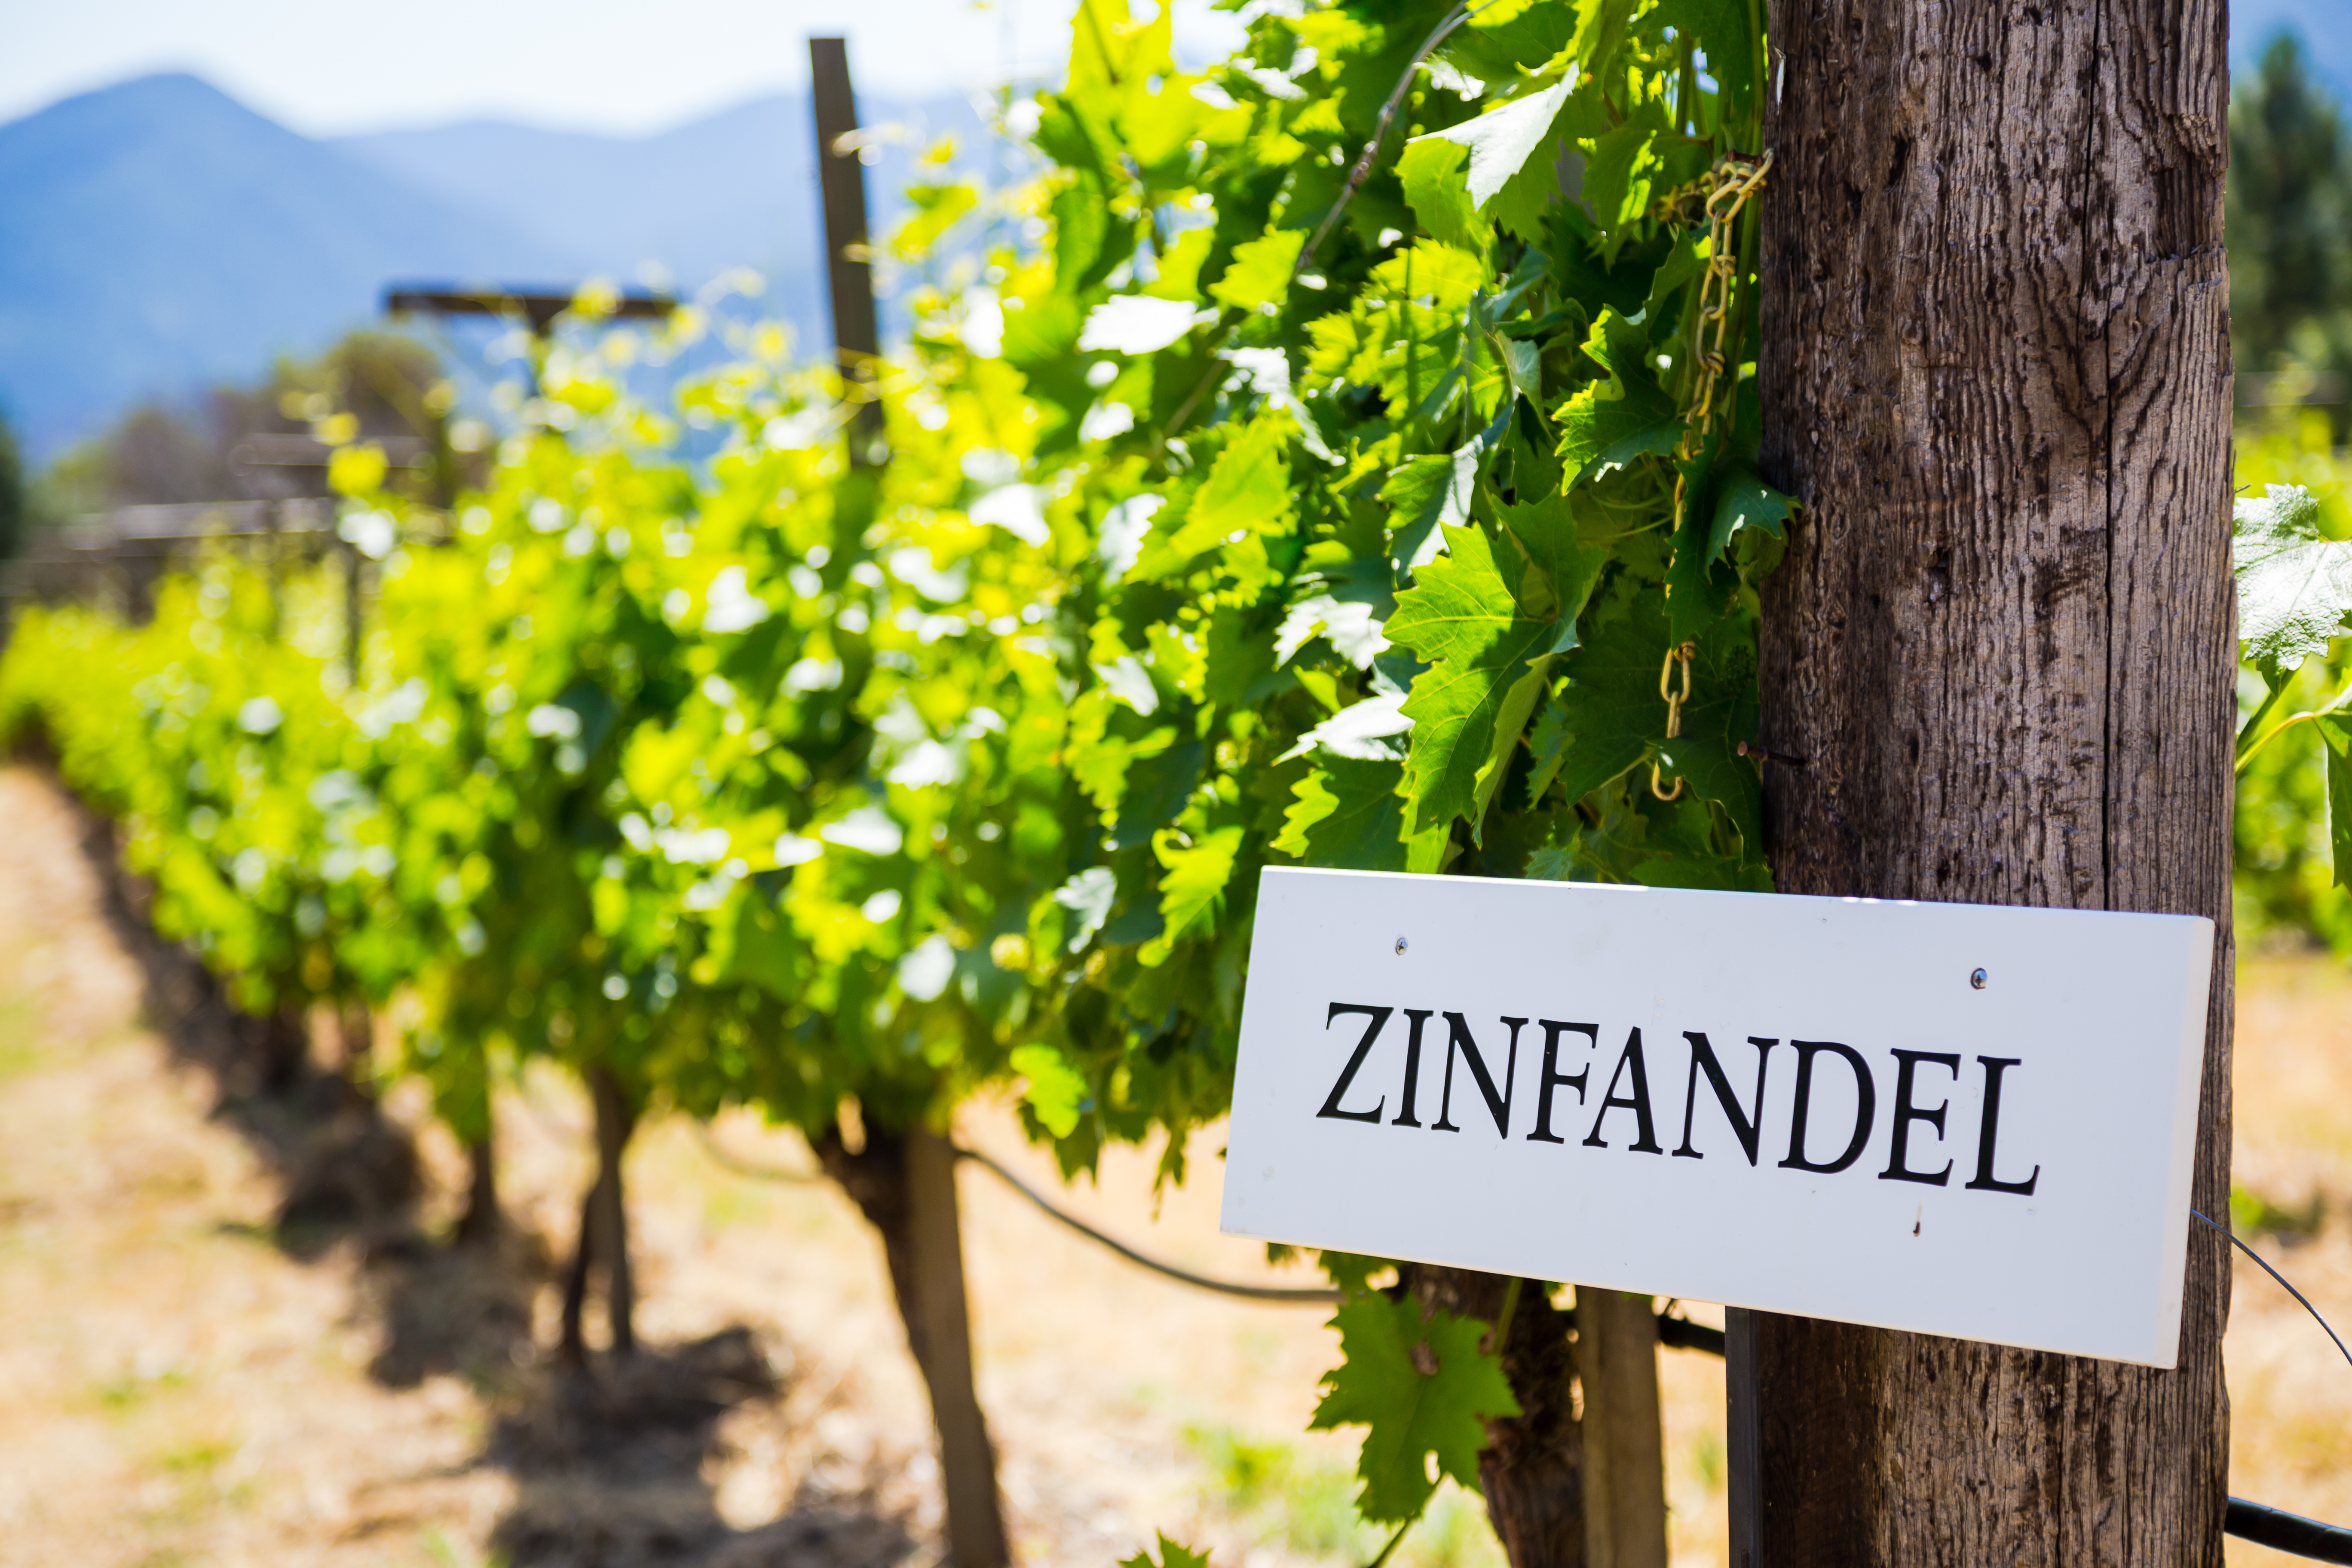 Zinfandel vine row with a sign reading "Zinfandel"